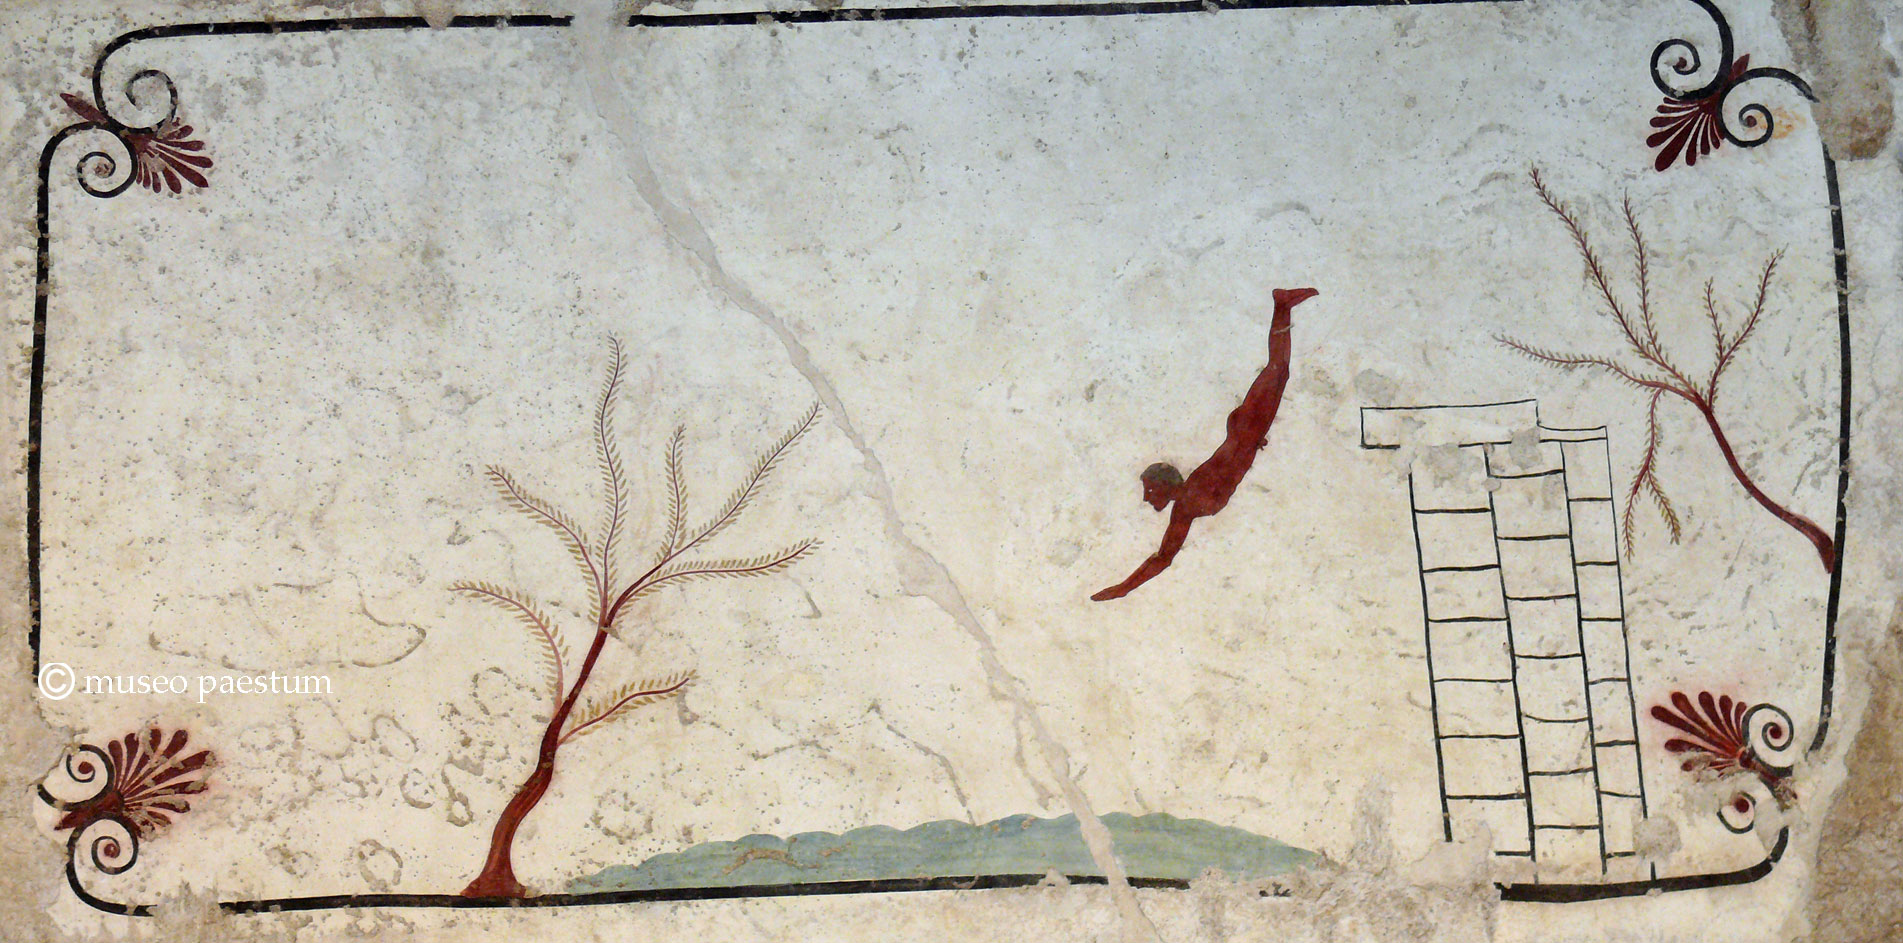 Bildmalerei aus dem Grab des Tauchers, Paestum